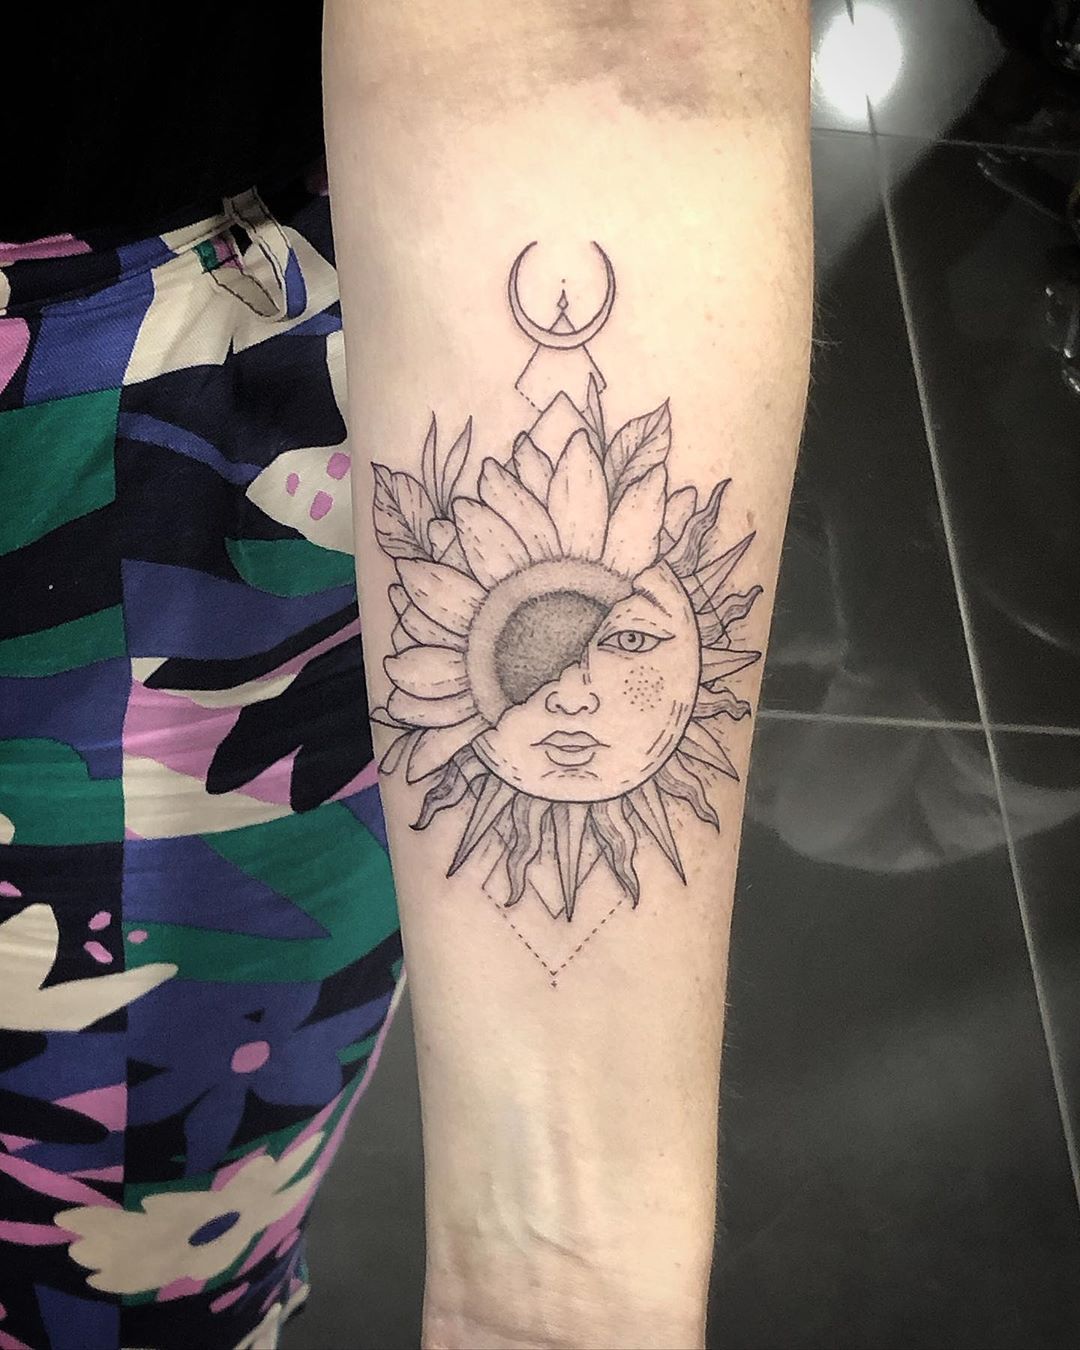 Sunflower and sun tattoo